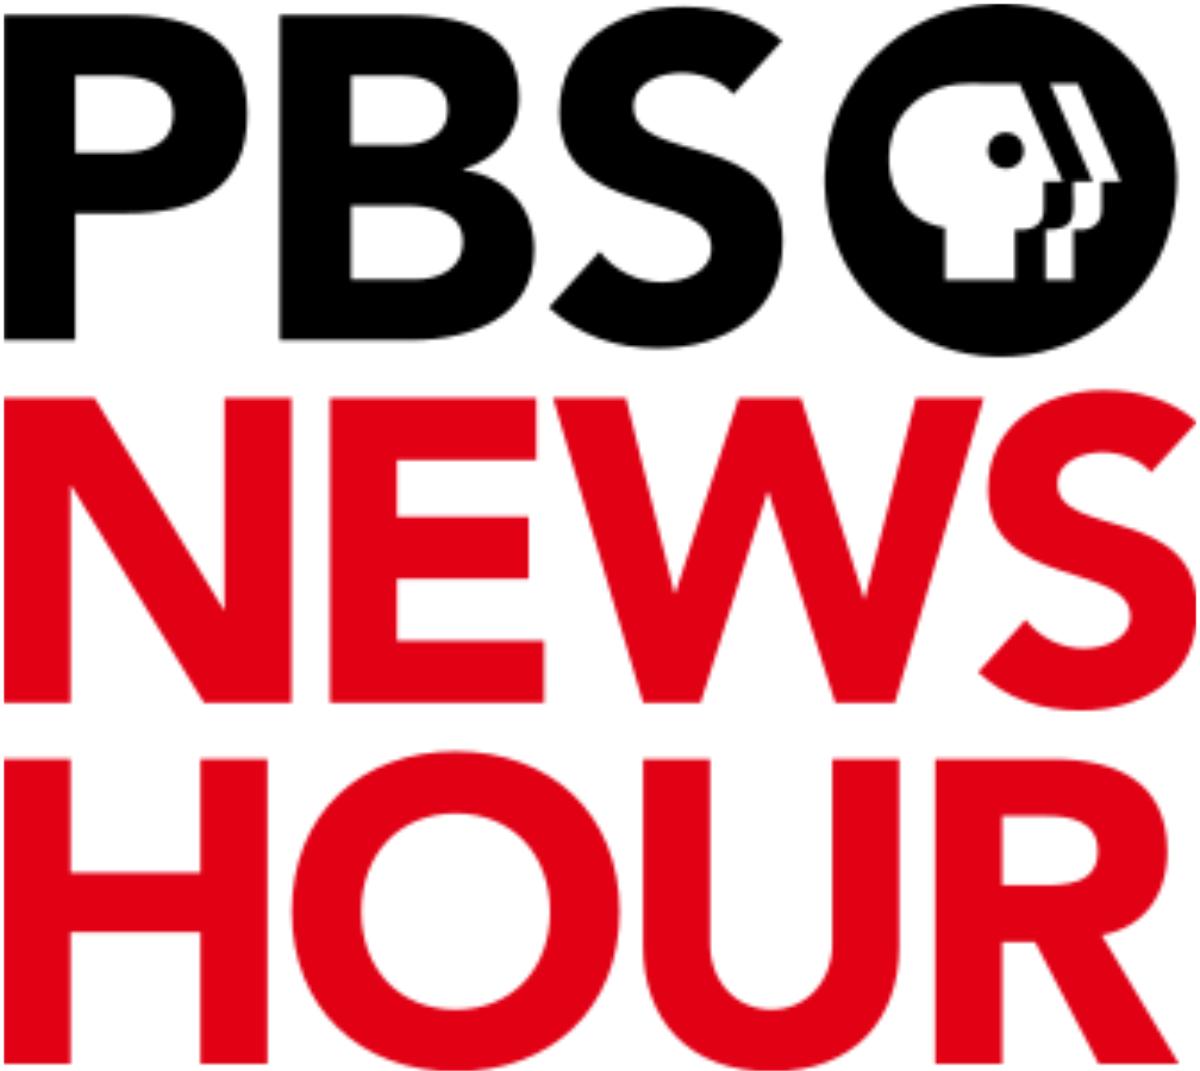 PBS_News_Hour_logo.png